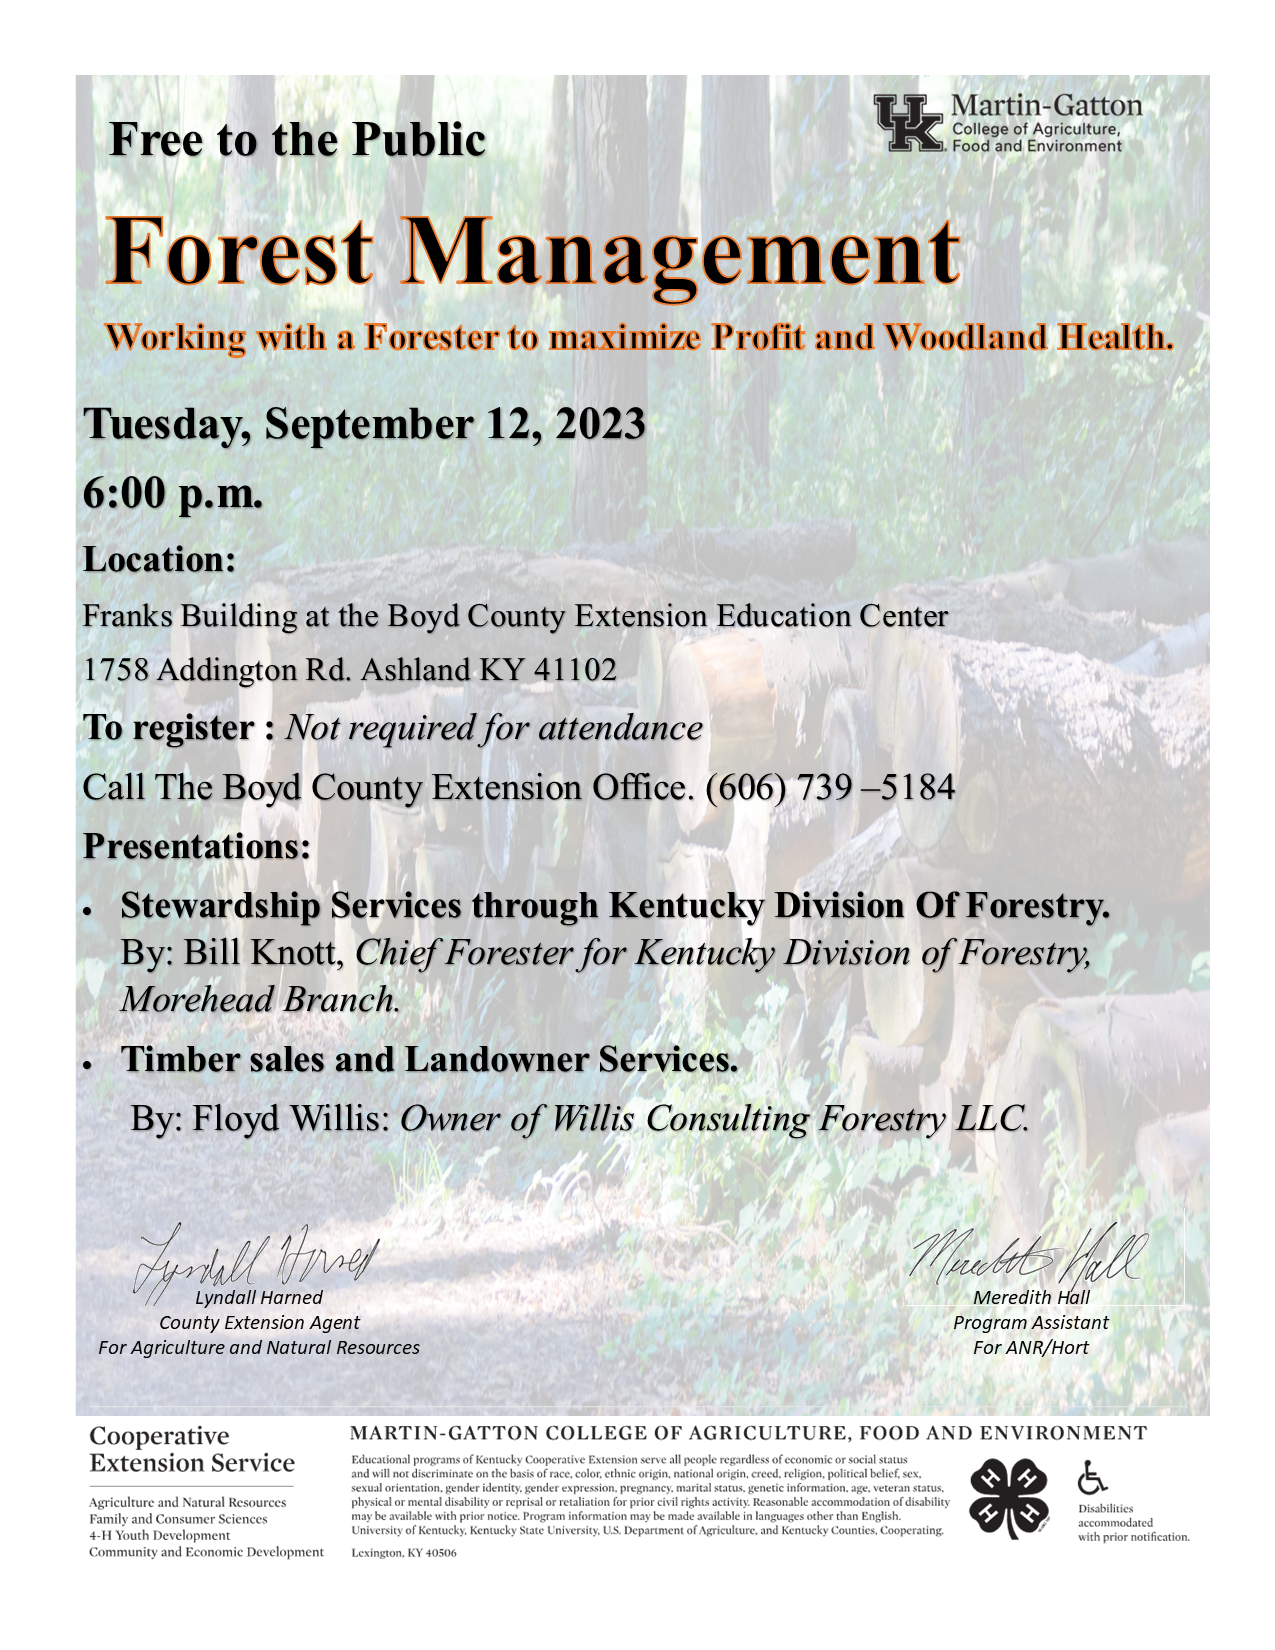 Forest Management Program